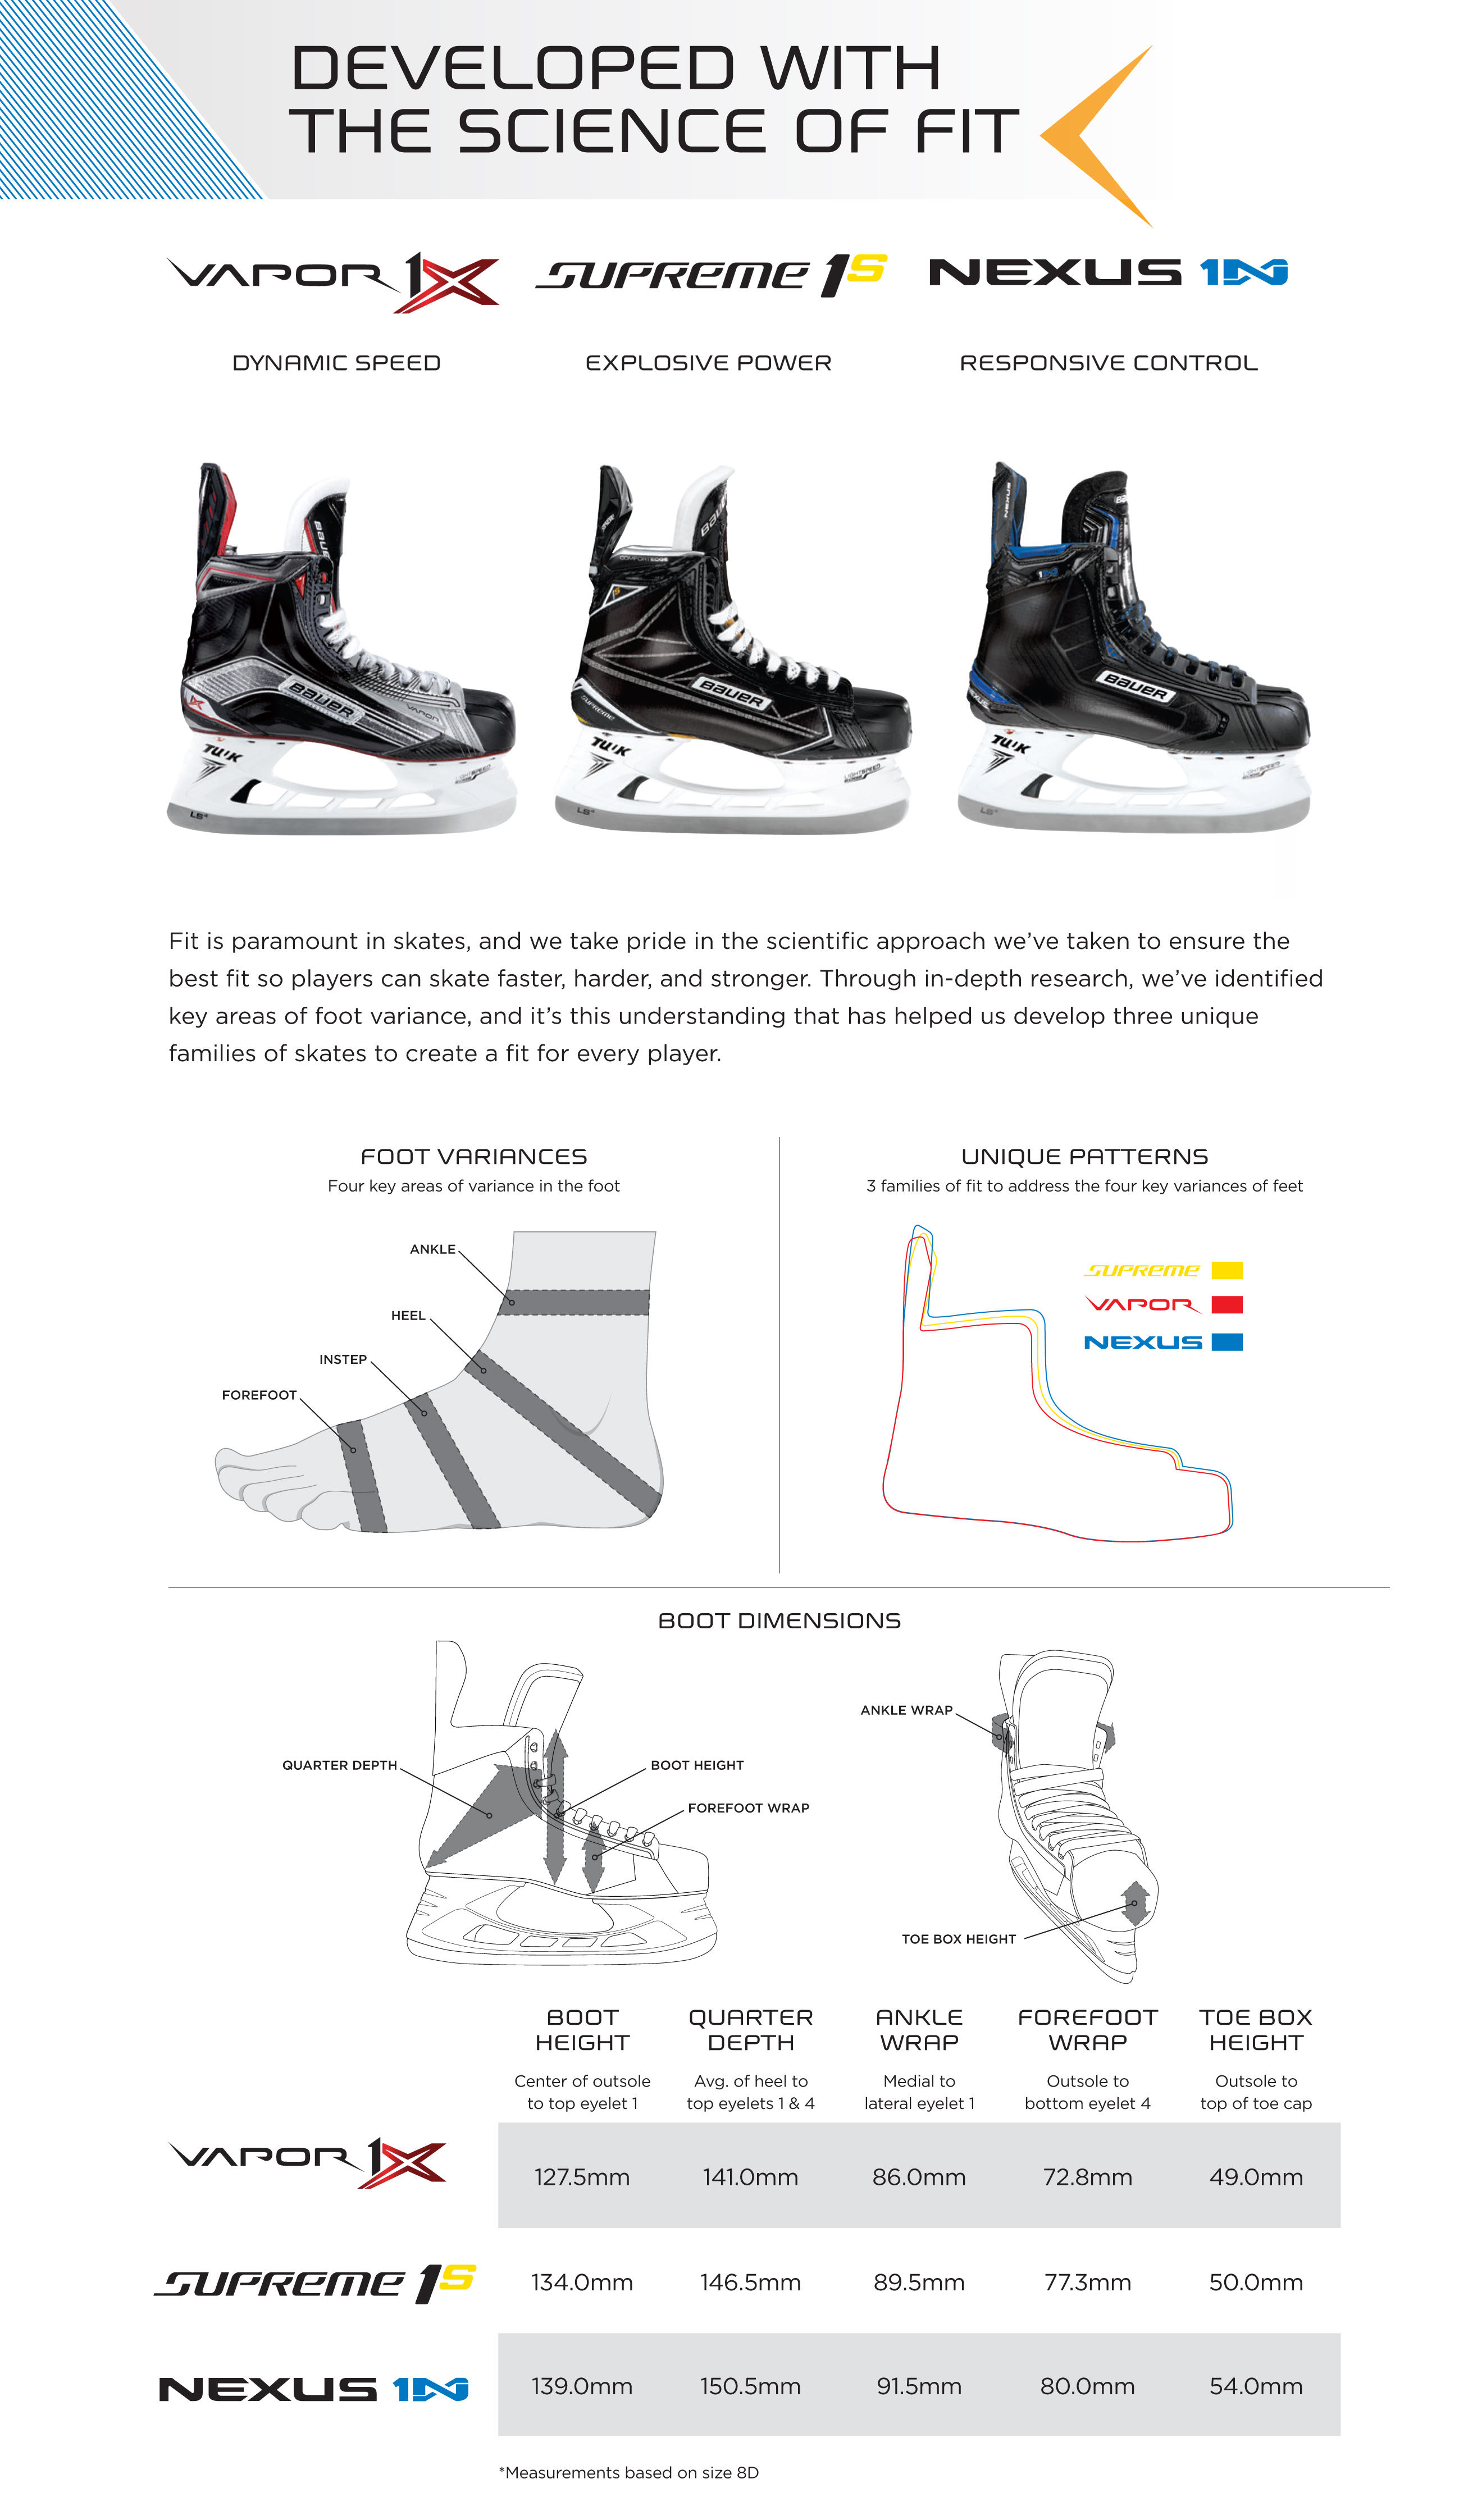 tour hockey skate size chart